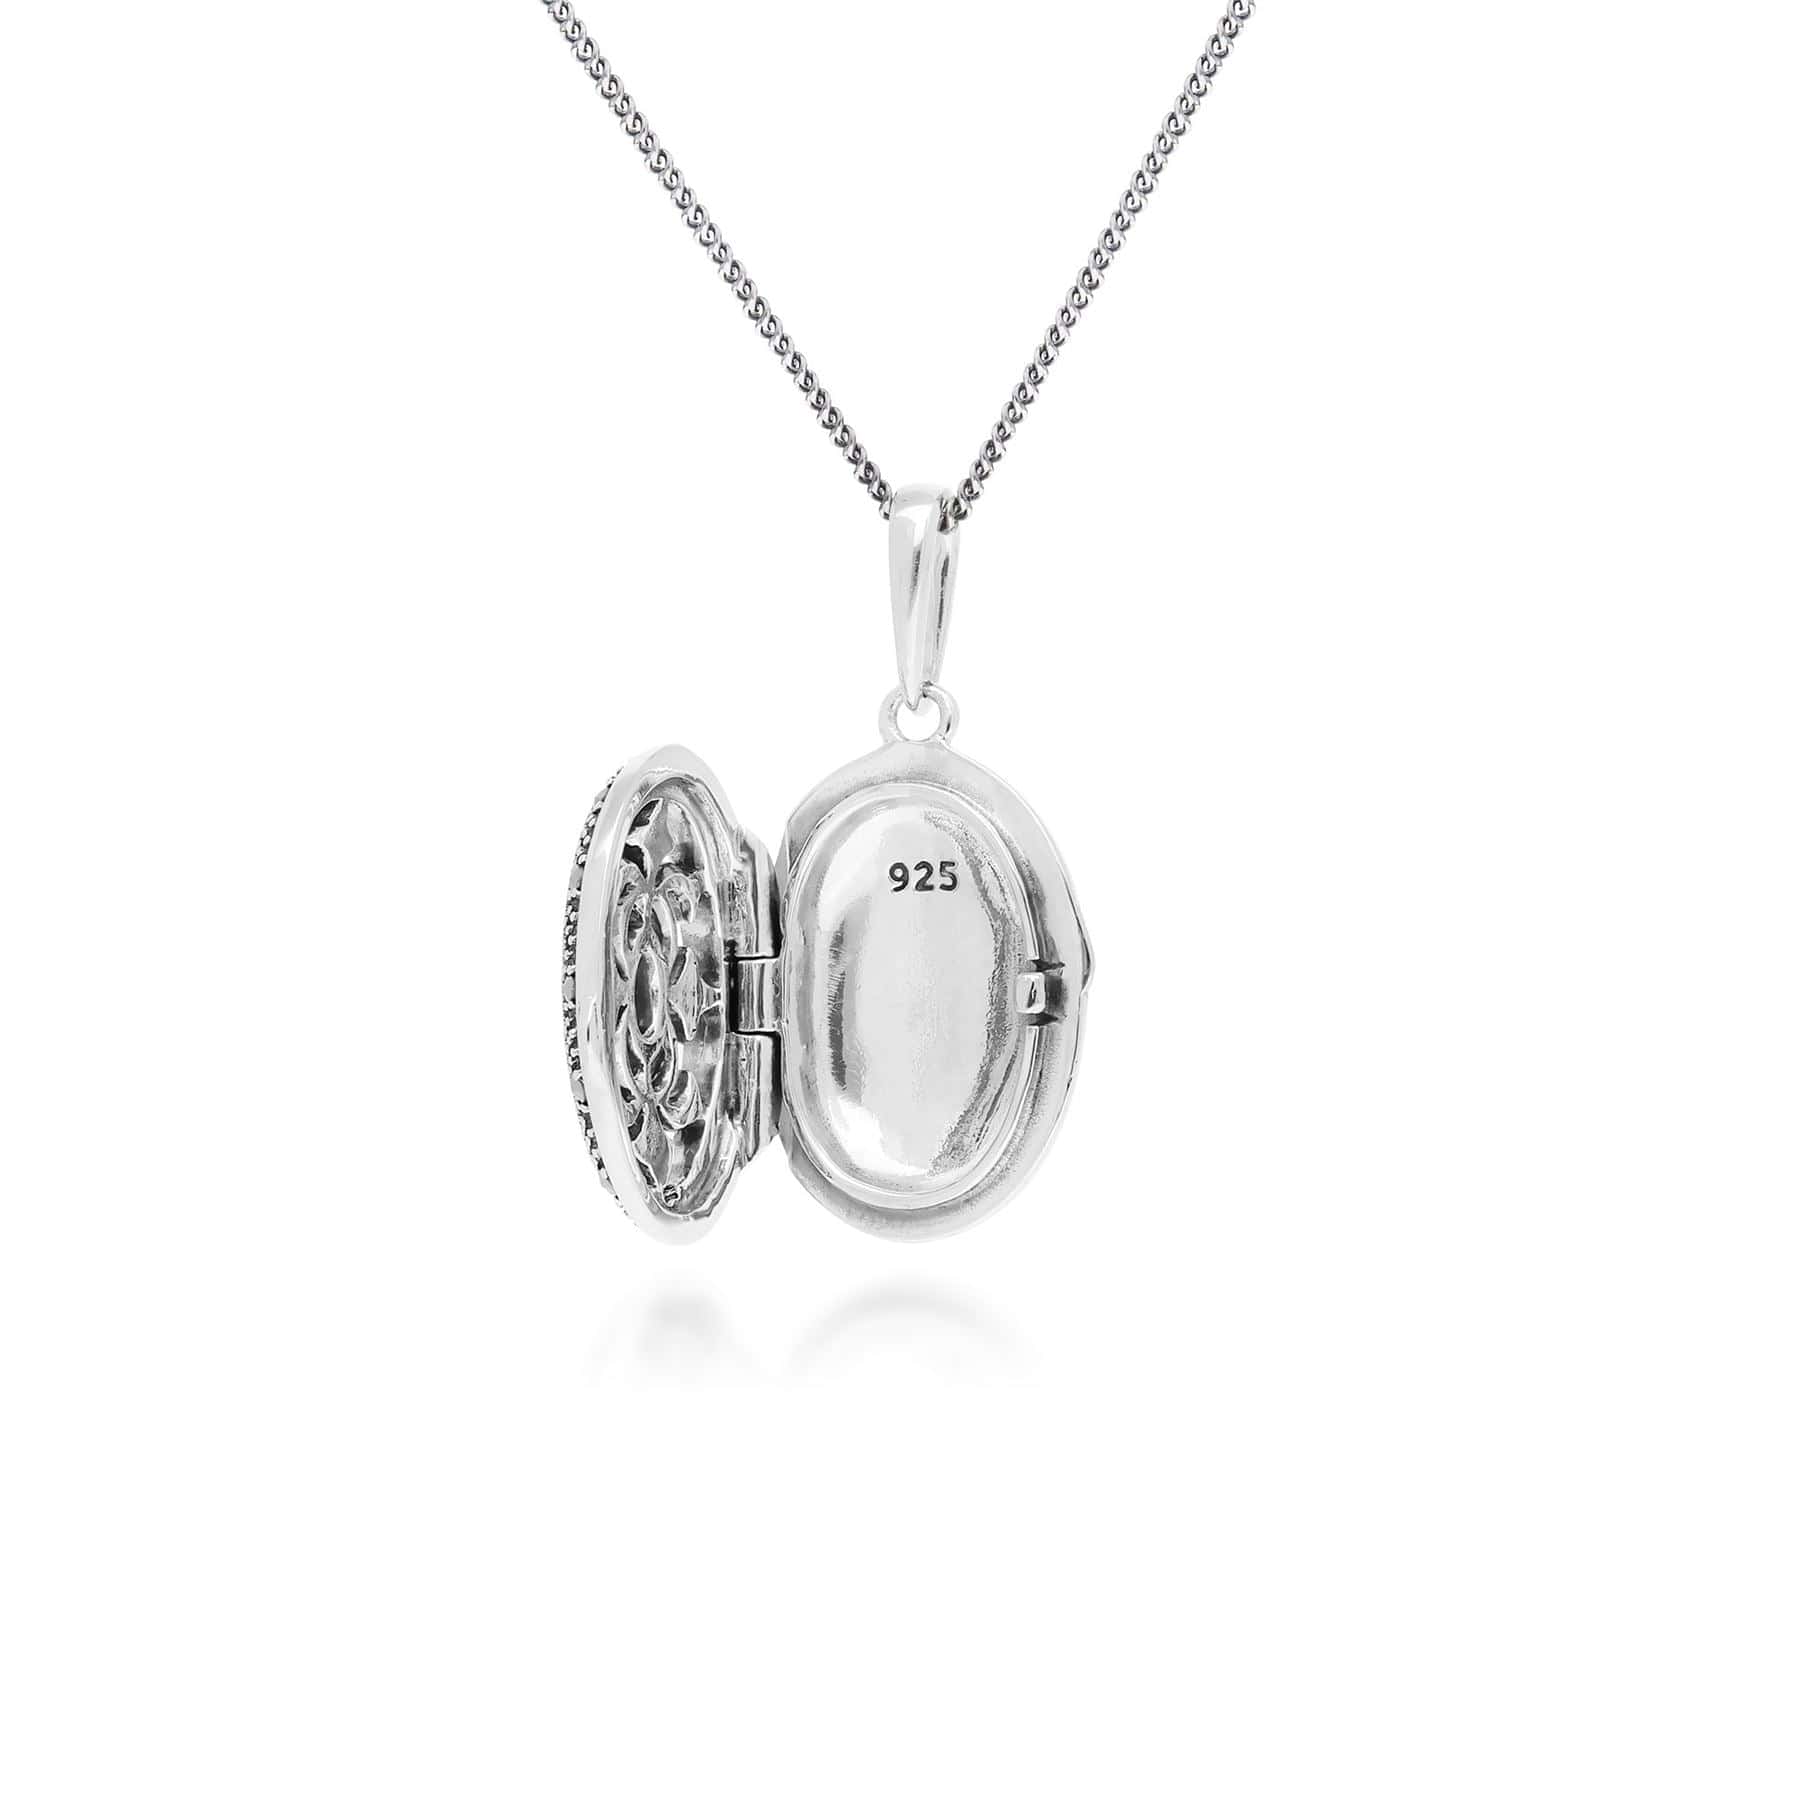 214N716207925 Art Nouveau Style Oval Peridot & Marcasite Locket Necklace in 925 Sterling Silver 3